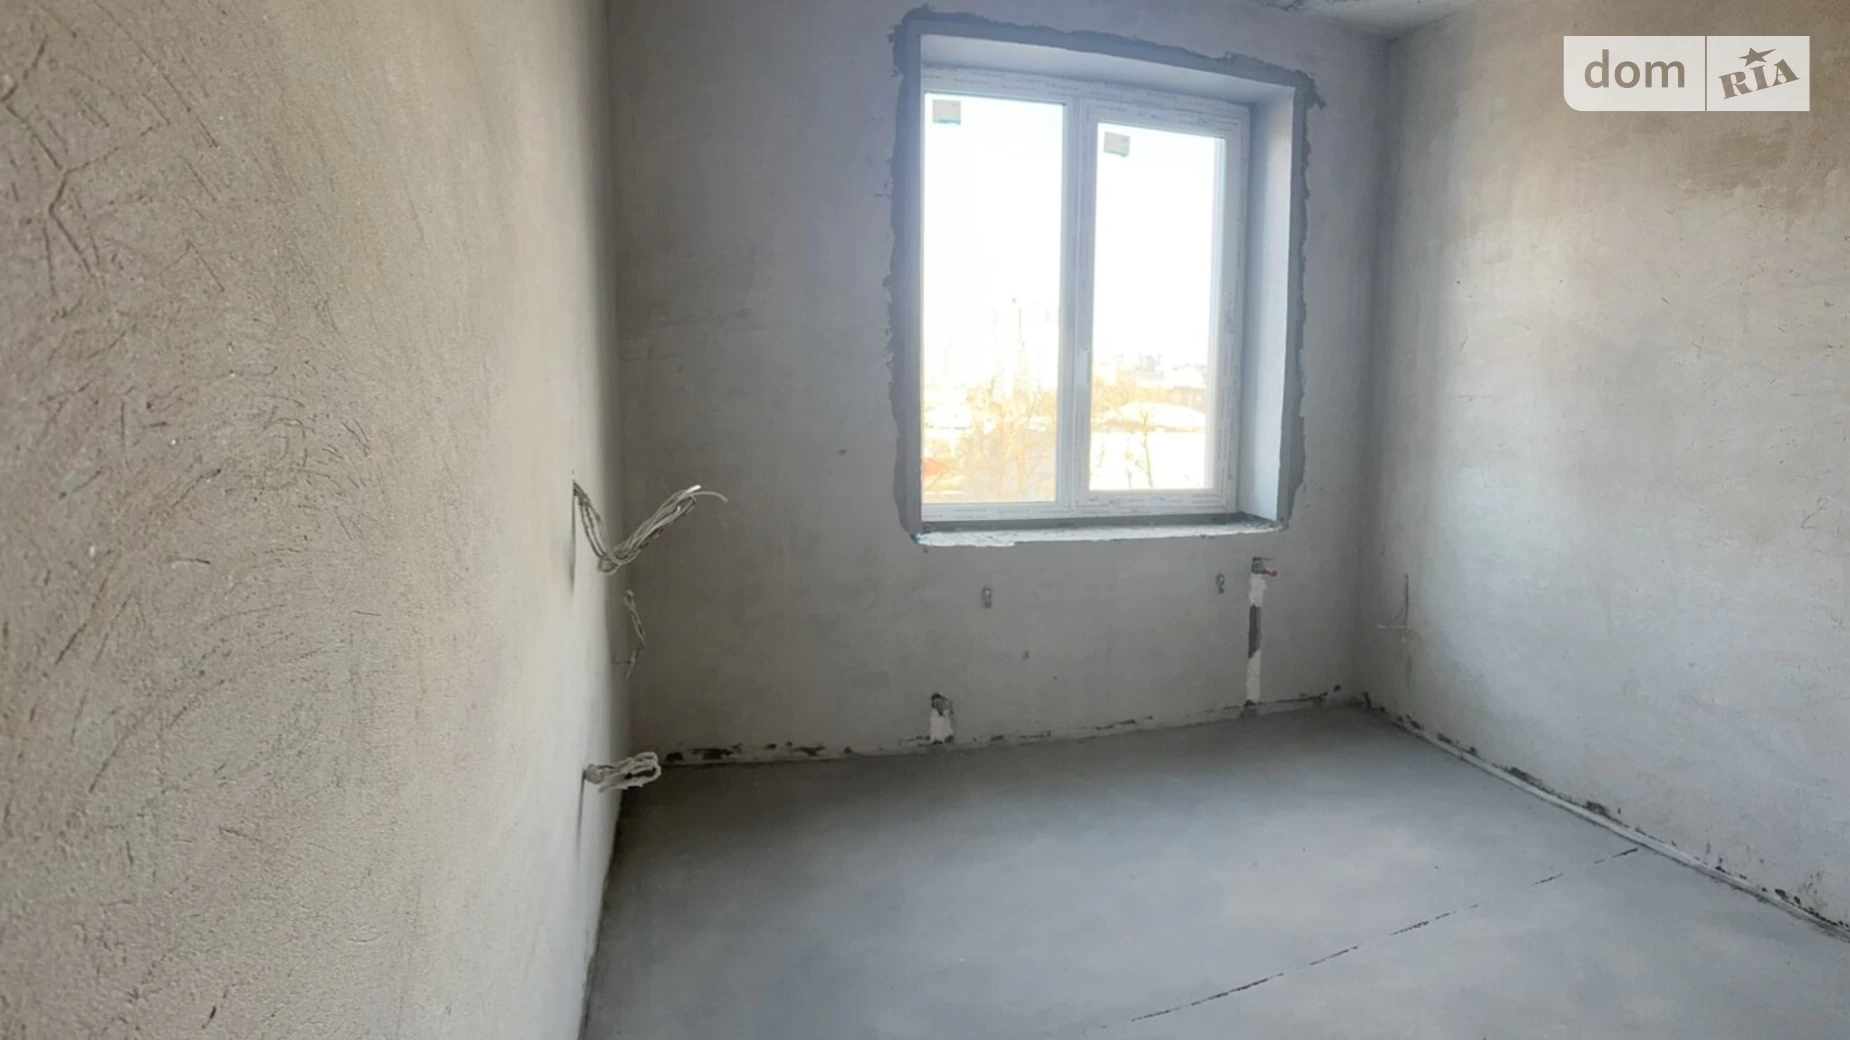 Продается 2-комнатная квартира 55.8 кв. м в Чернигове - фото 3